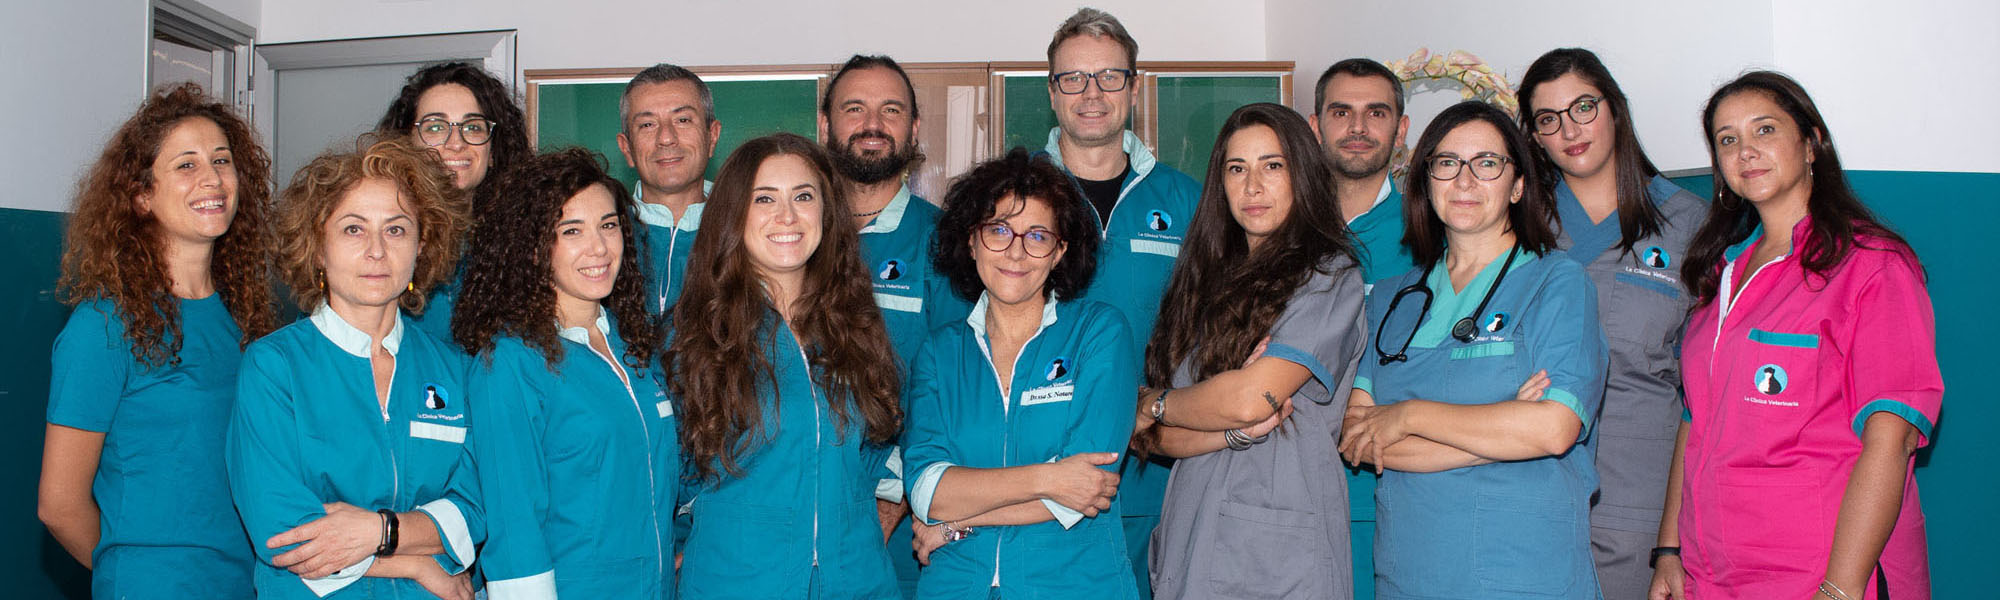 Team La clinica veterinaria srl | medici veterinari